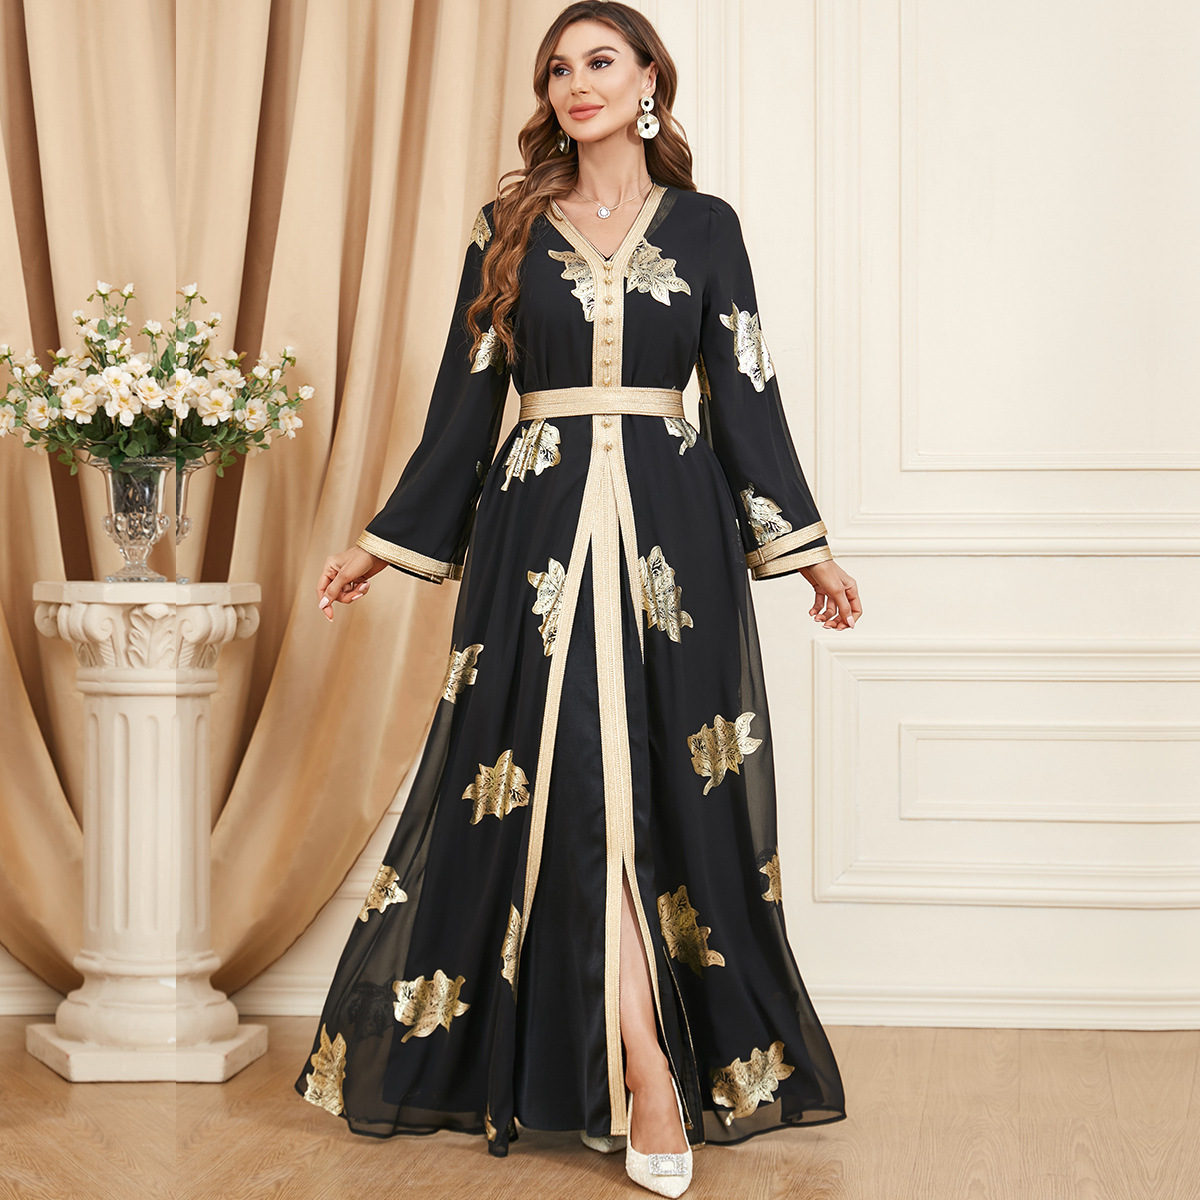 Middle Eastern Muslim women's clothing abaya spring fashion women's clothing two-piece dress